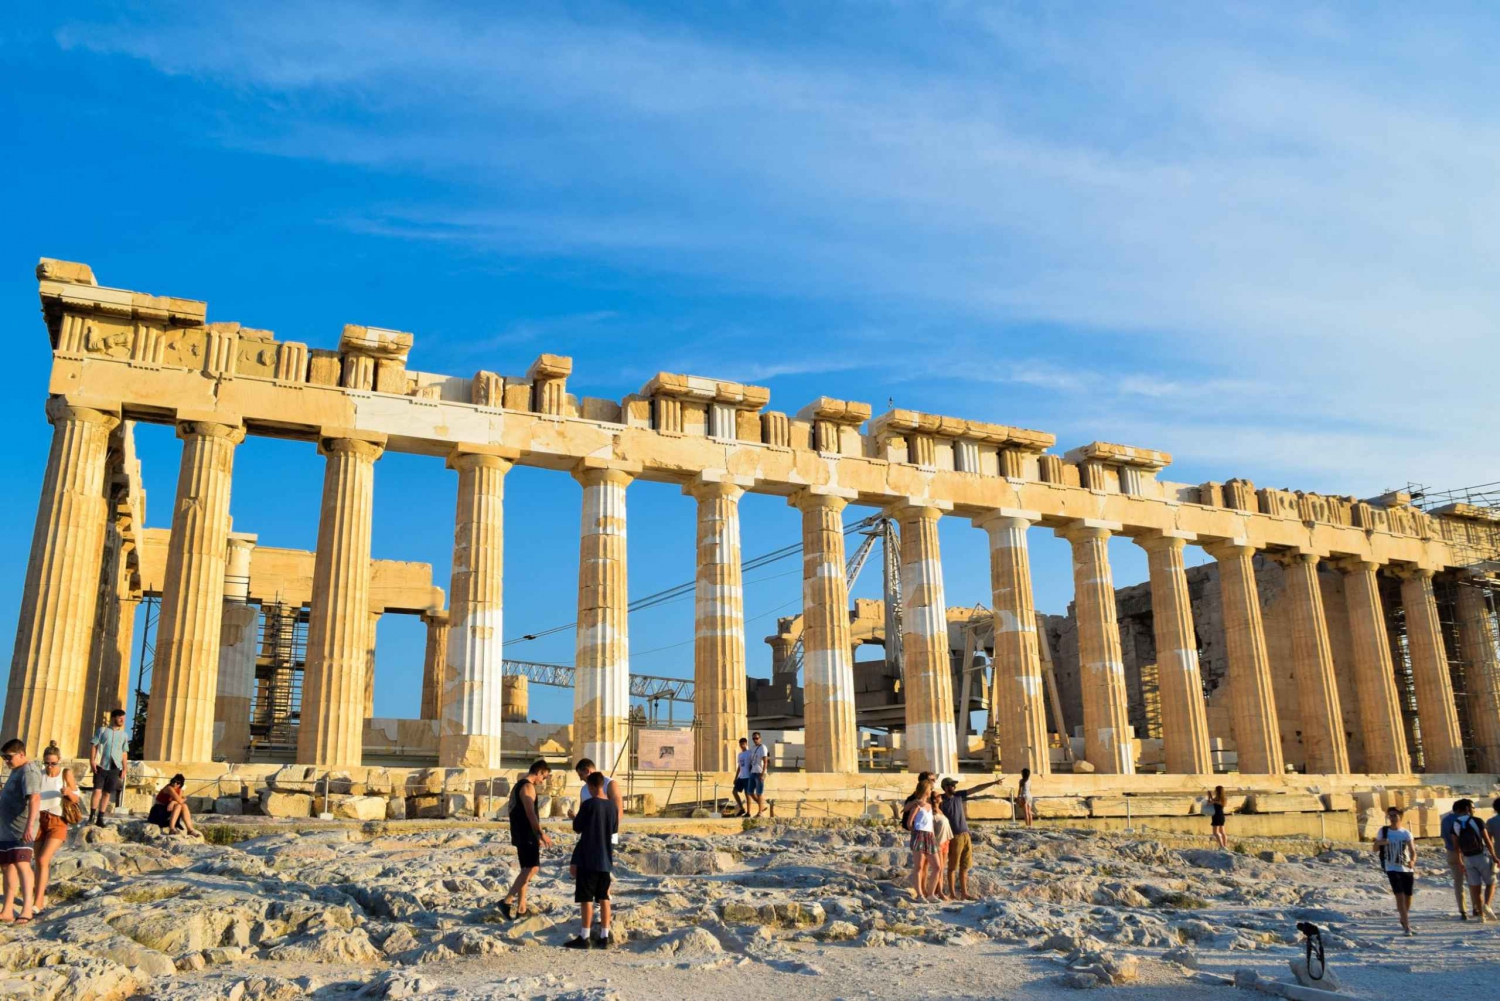 Athens: Acropolis Skip-the-Line Entry Ticket with Audio Tour